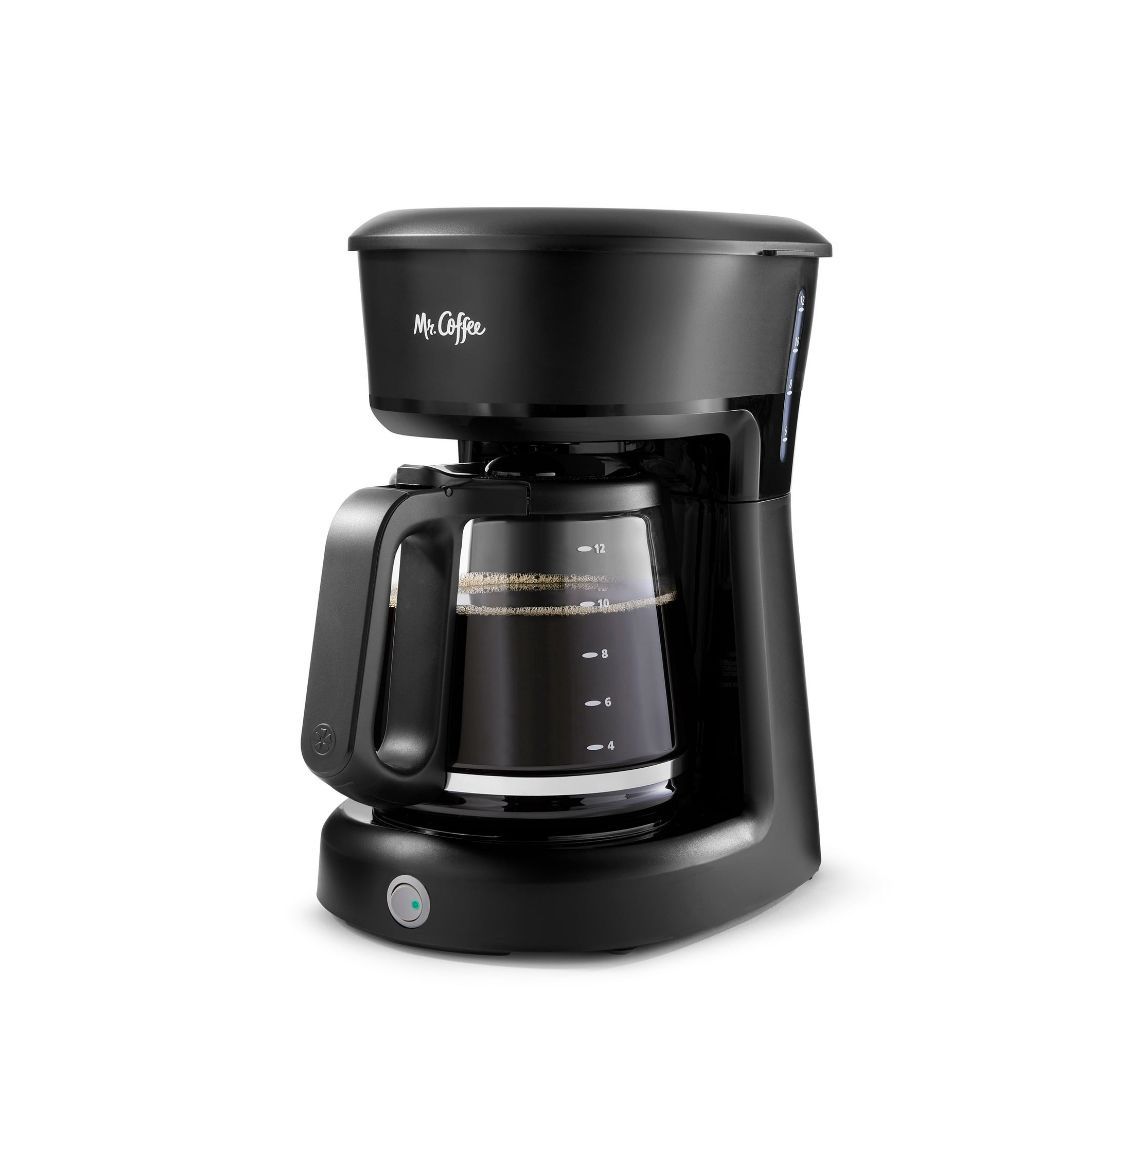 Mr. Coffee 12-Cup Switch Coffee Maker, Black $14.99